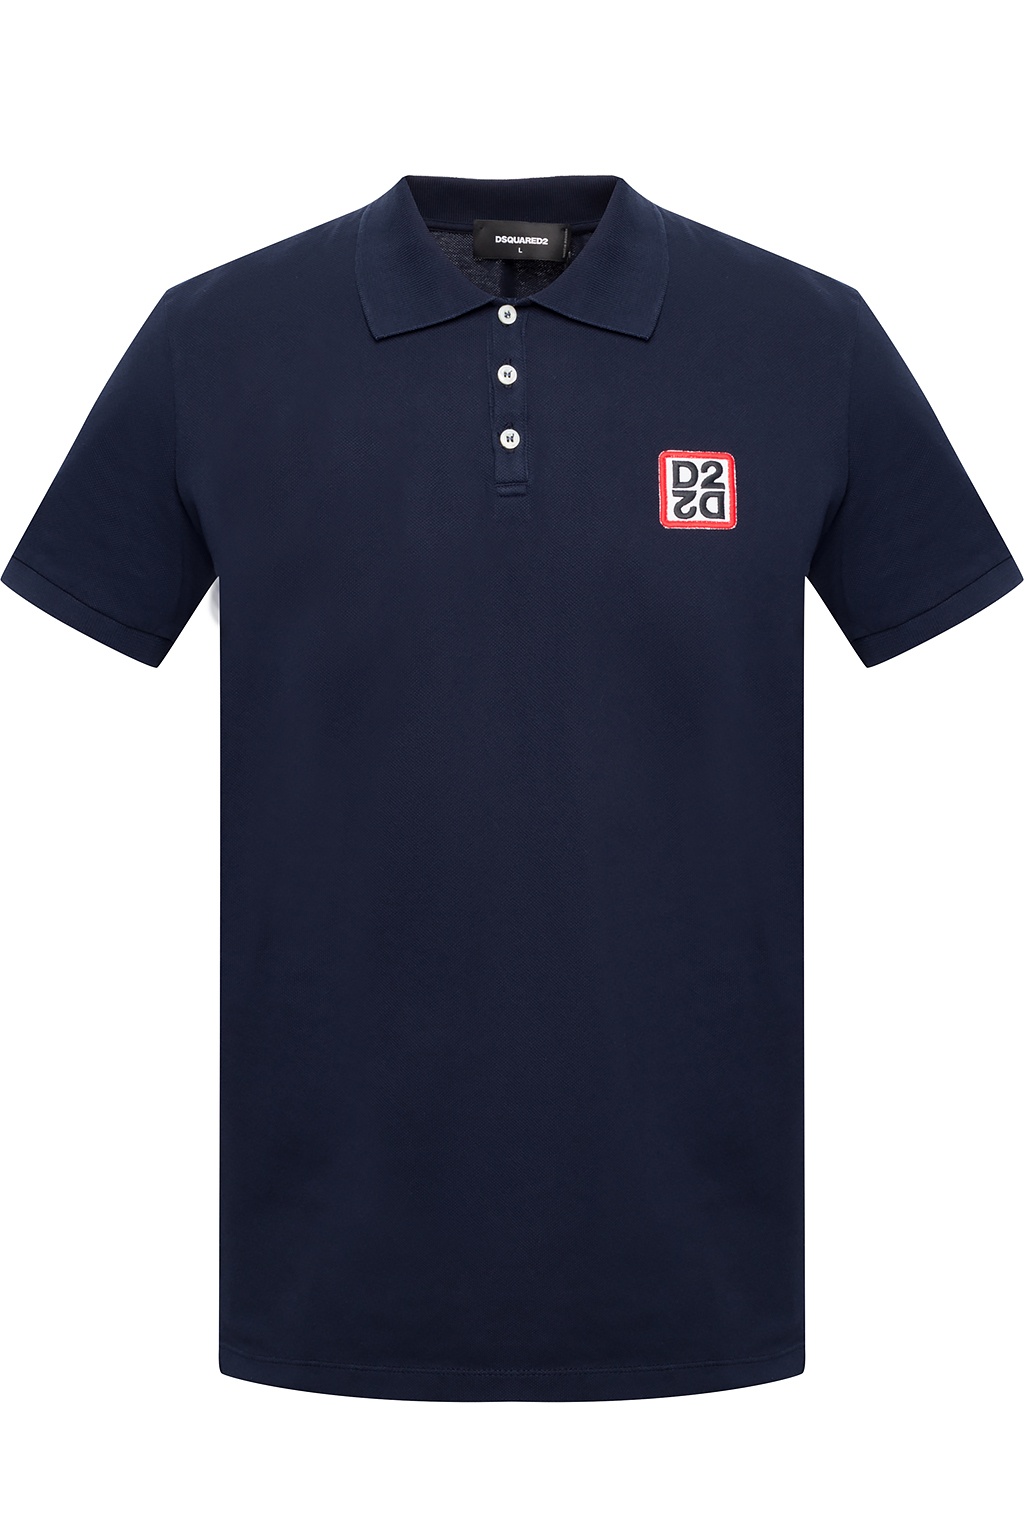 Polo shirt with logo Dsquared2 - Vitkac 